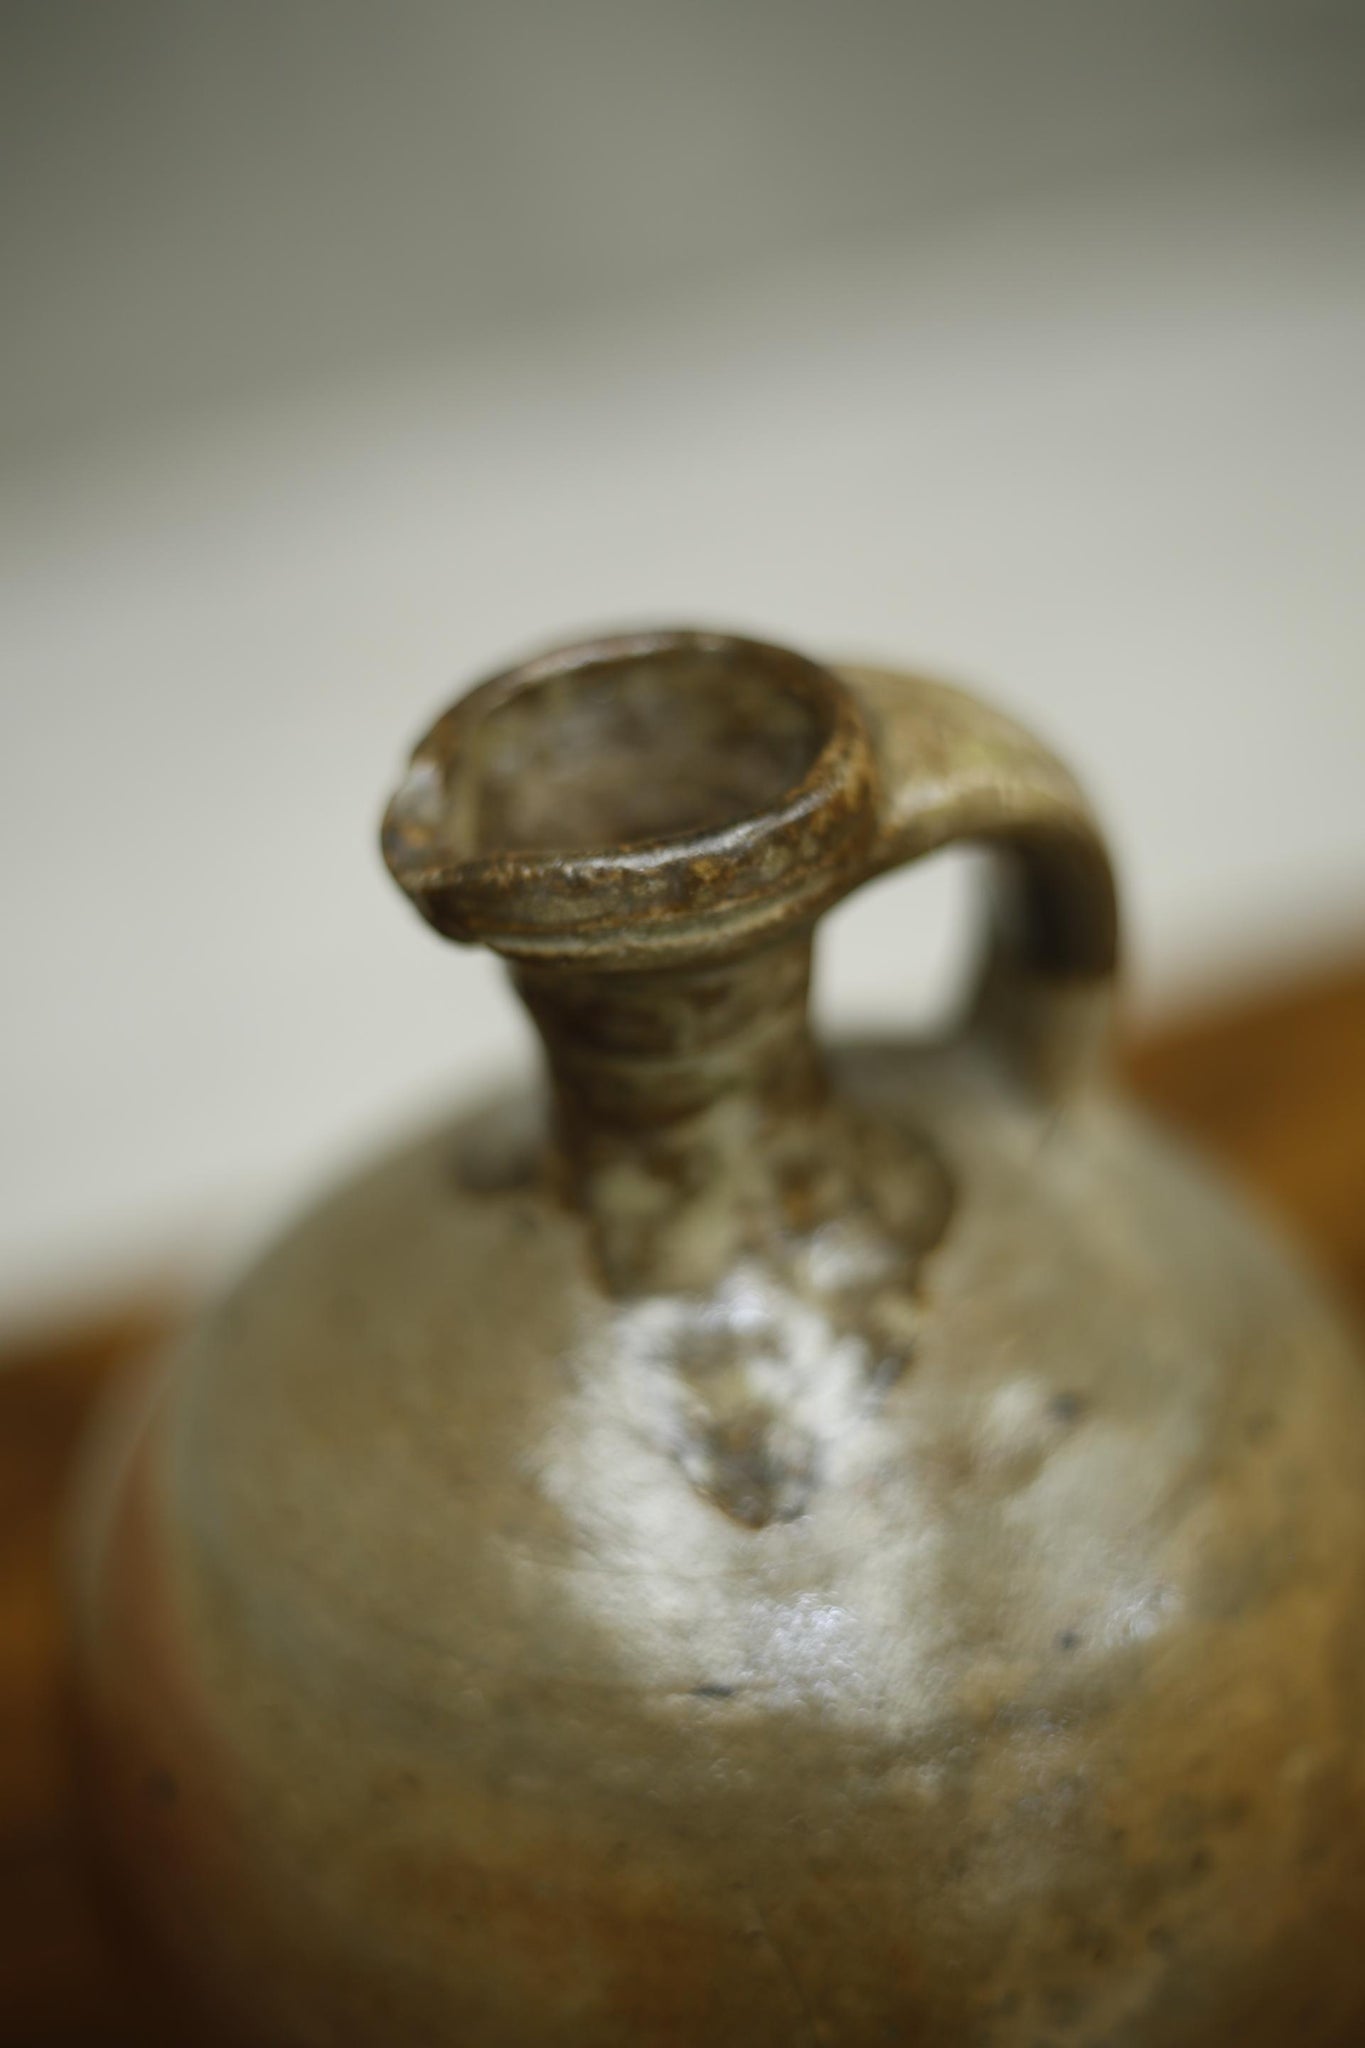 Early 20th century Nut oil jug No1